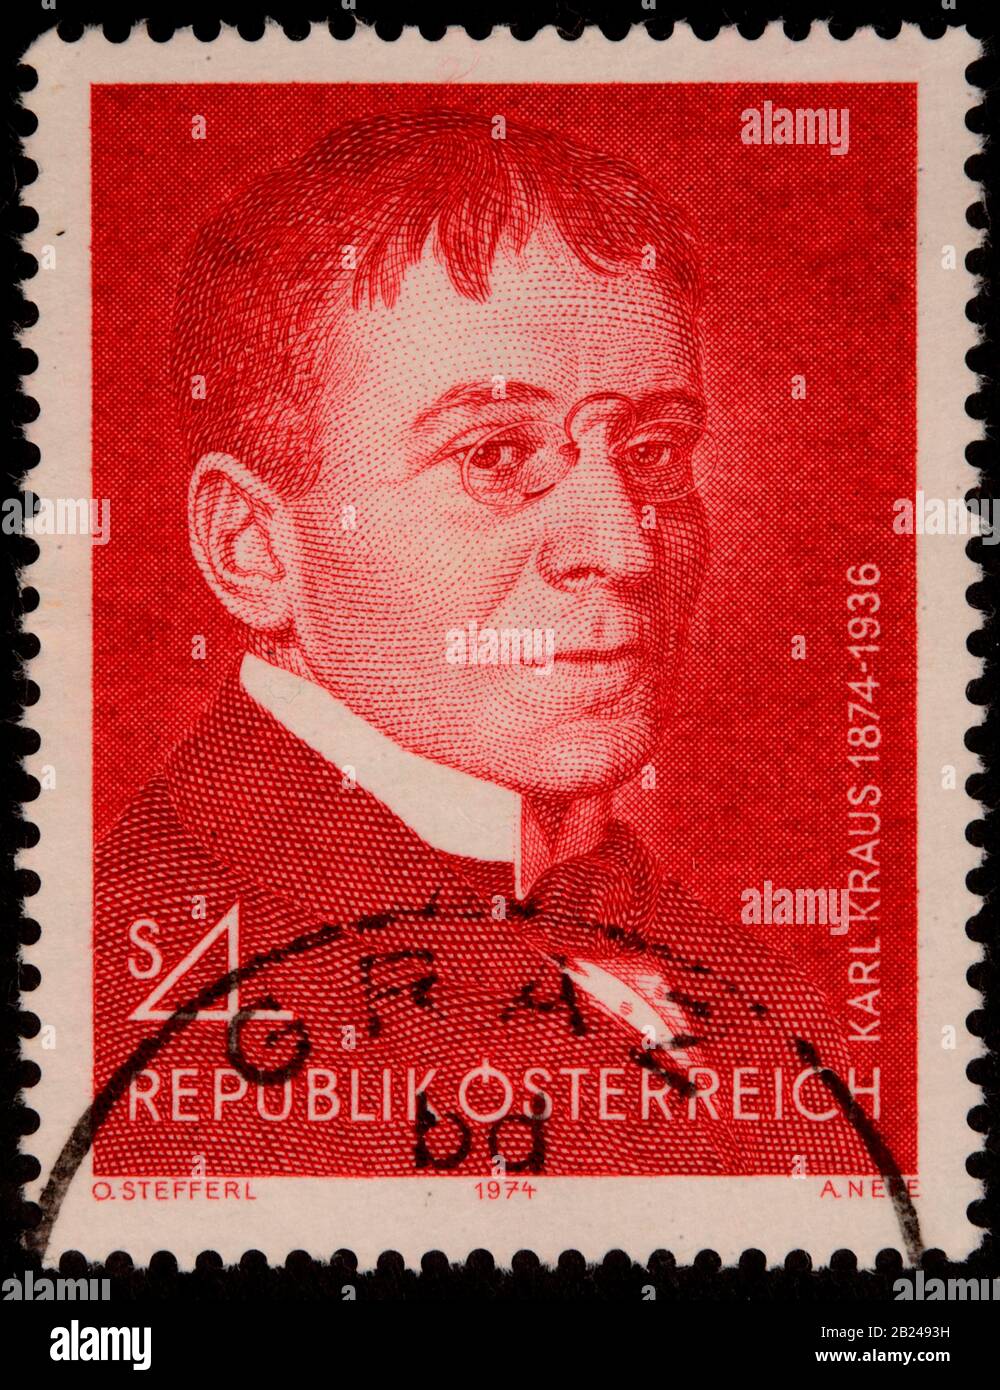 Karl Kraus, an Austrian writer and journalist, portrait on an Austrian stamp Stock Photo